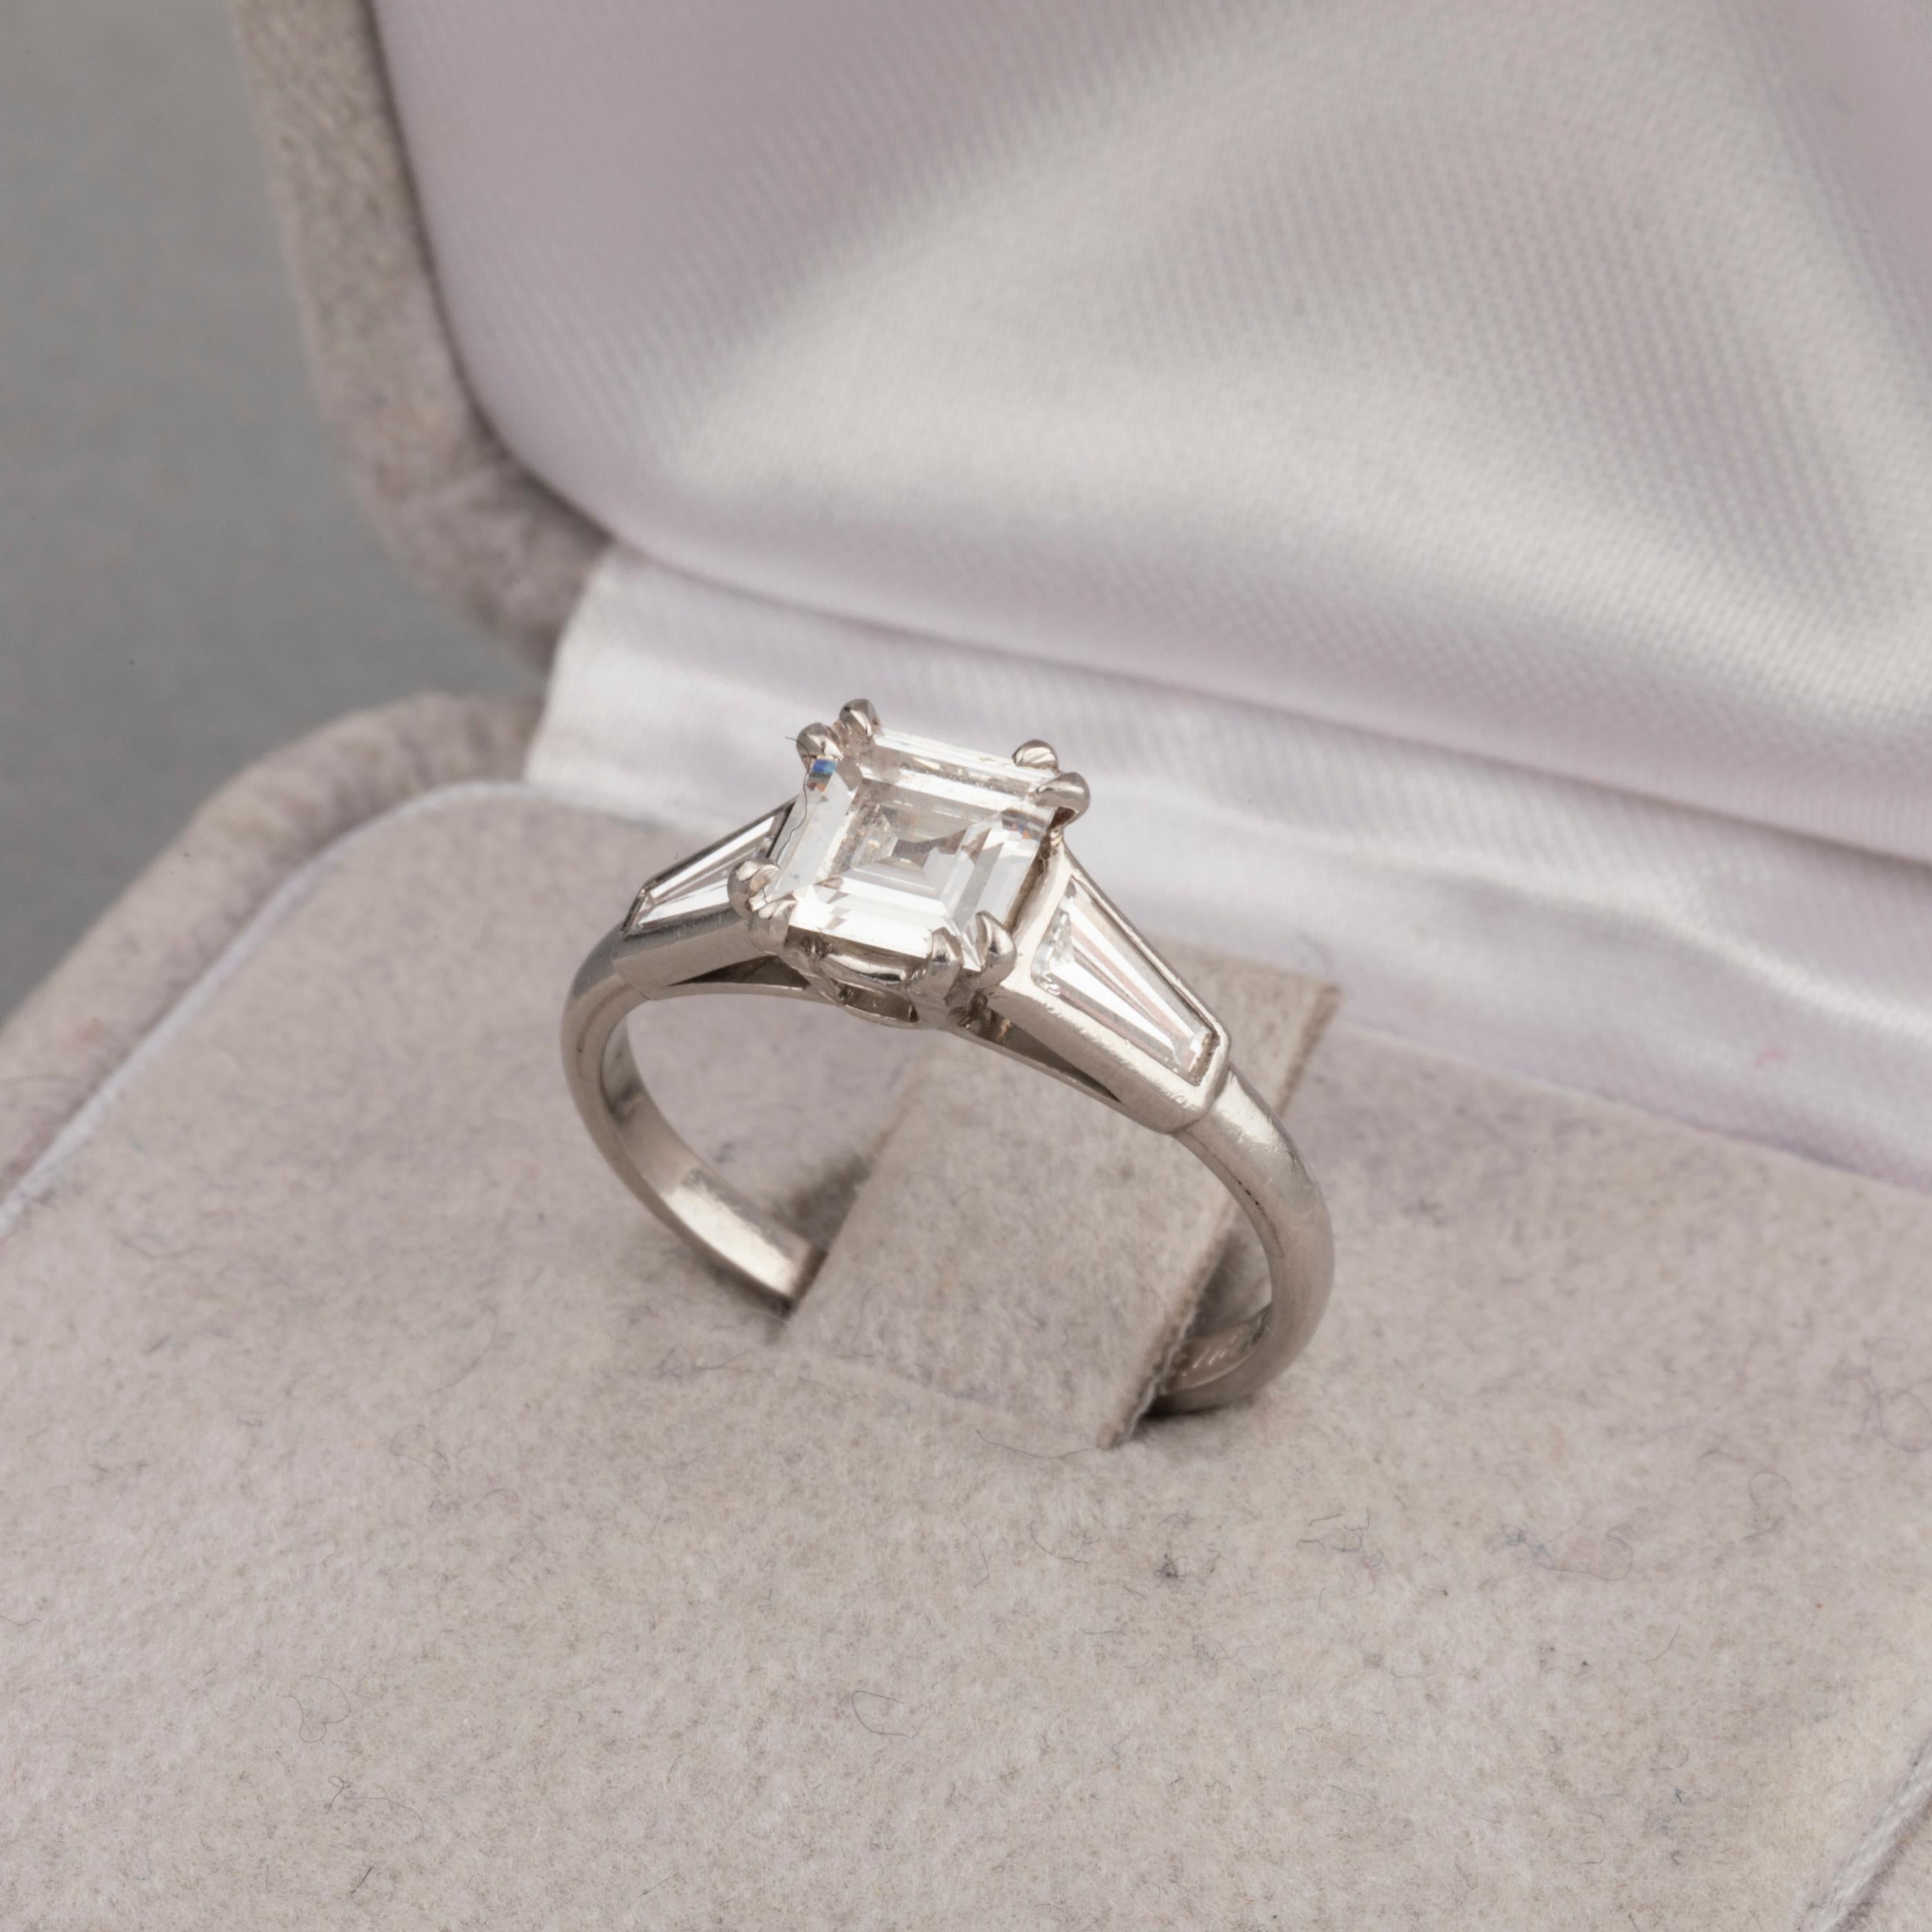 chaumet engagement ring price